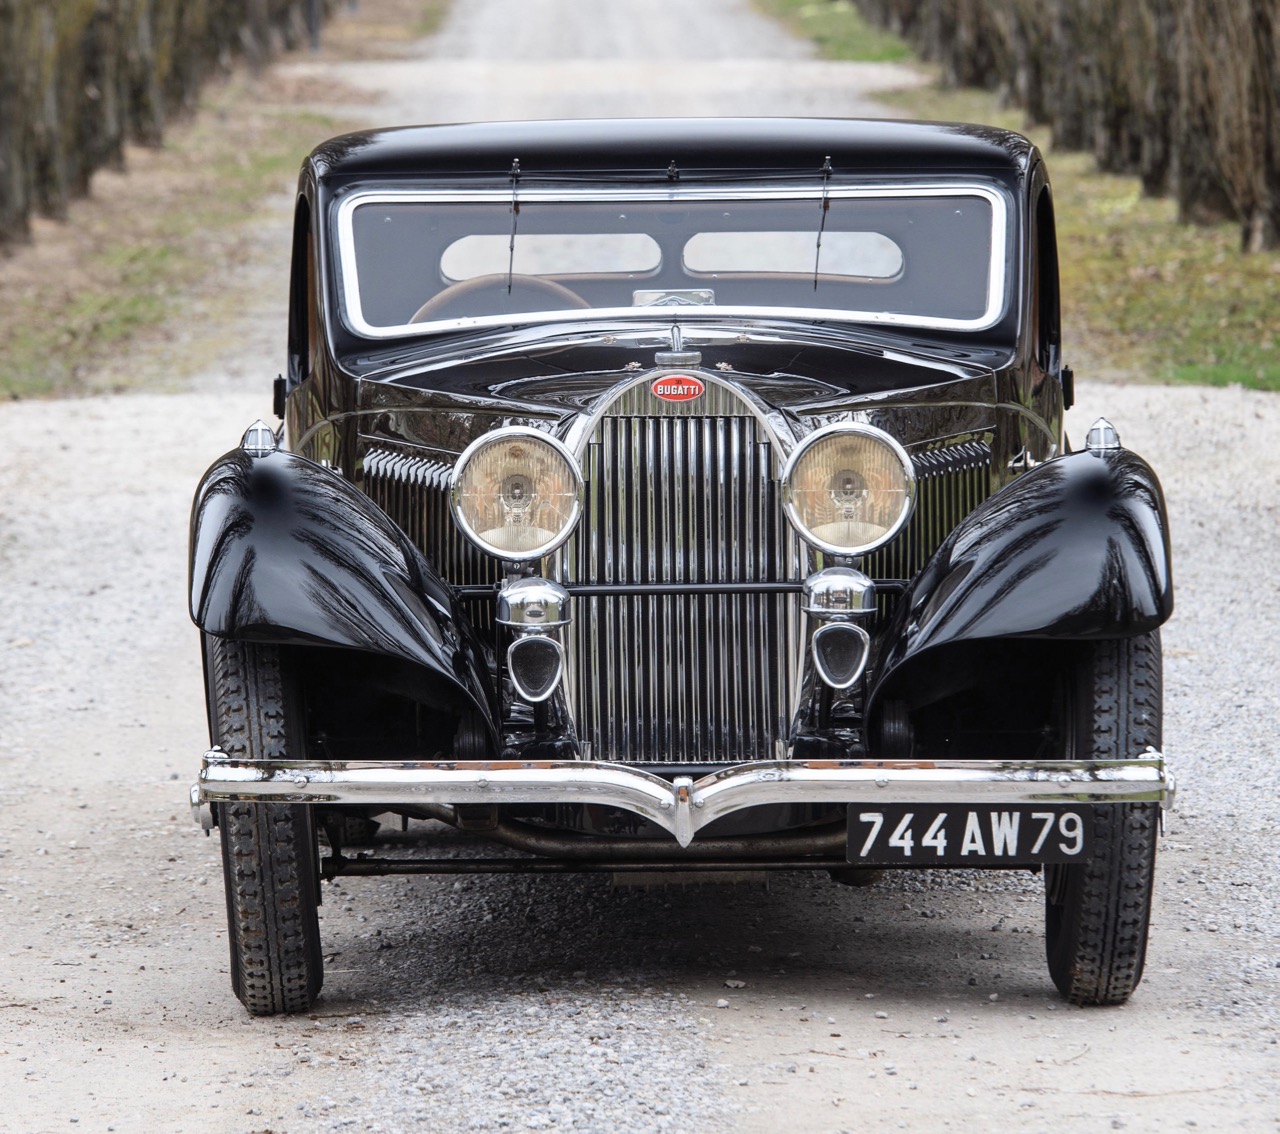 Bugatti has traveled only 18,000 kilometers